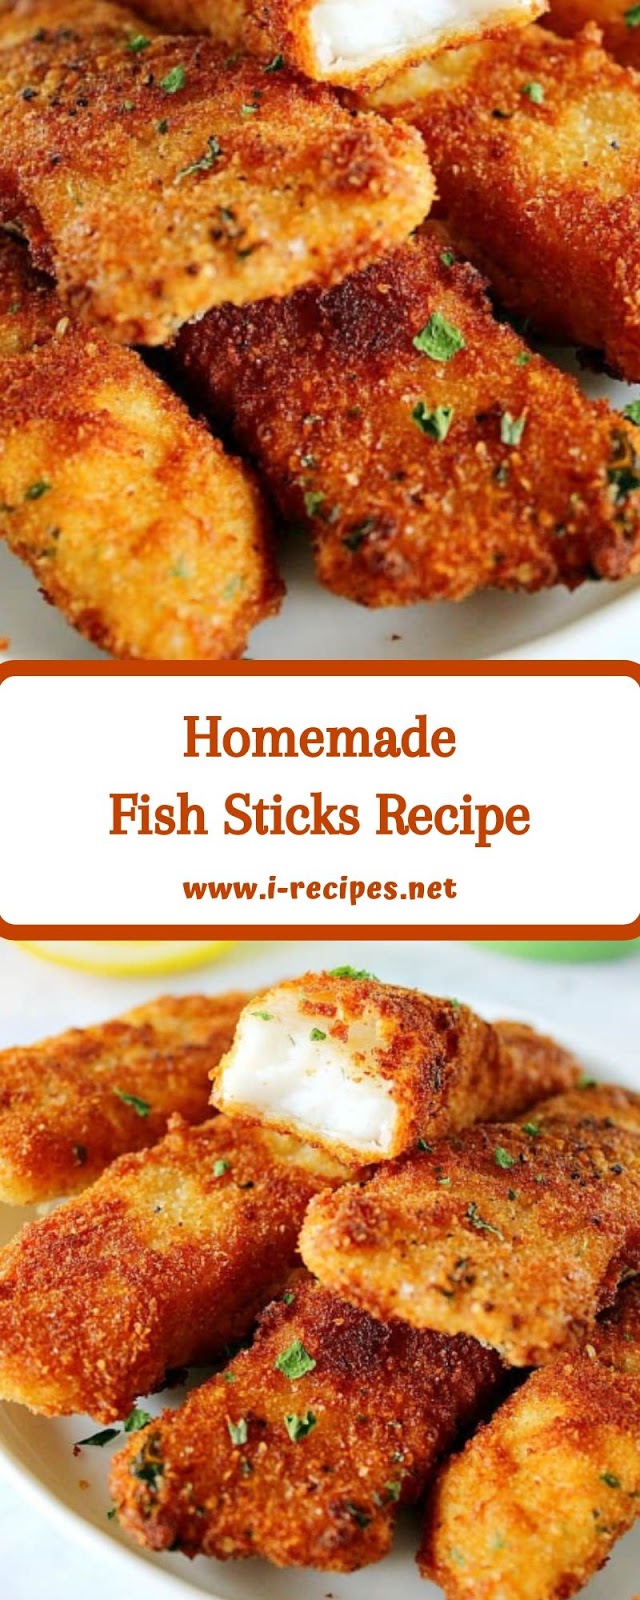 Homemade Fish Sticks Recipe